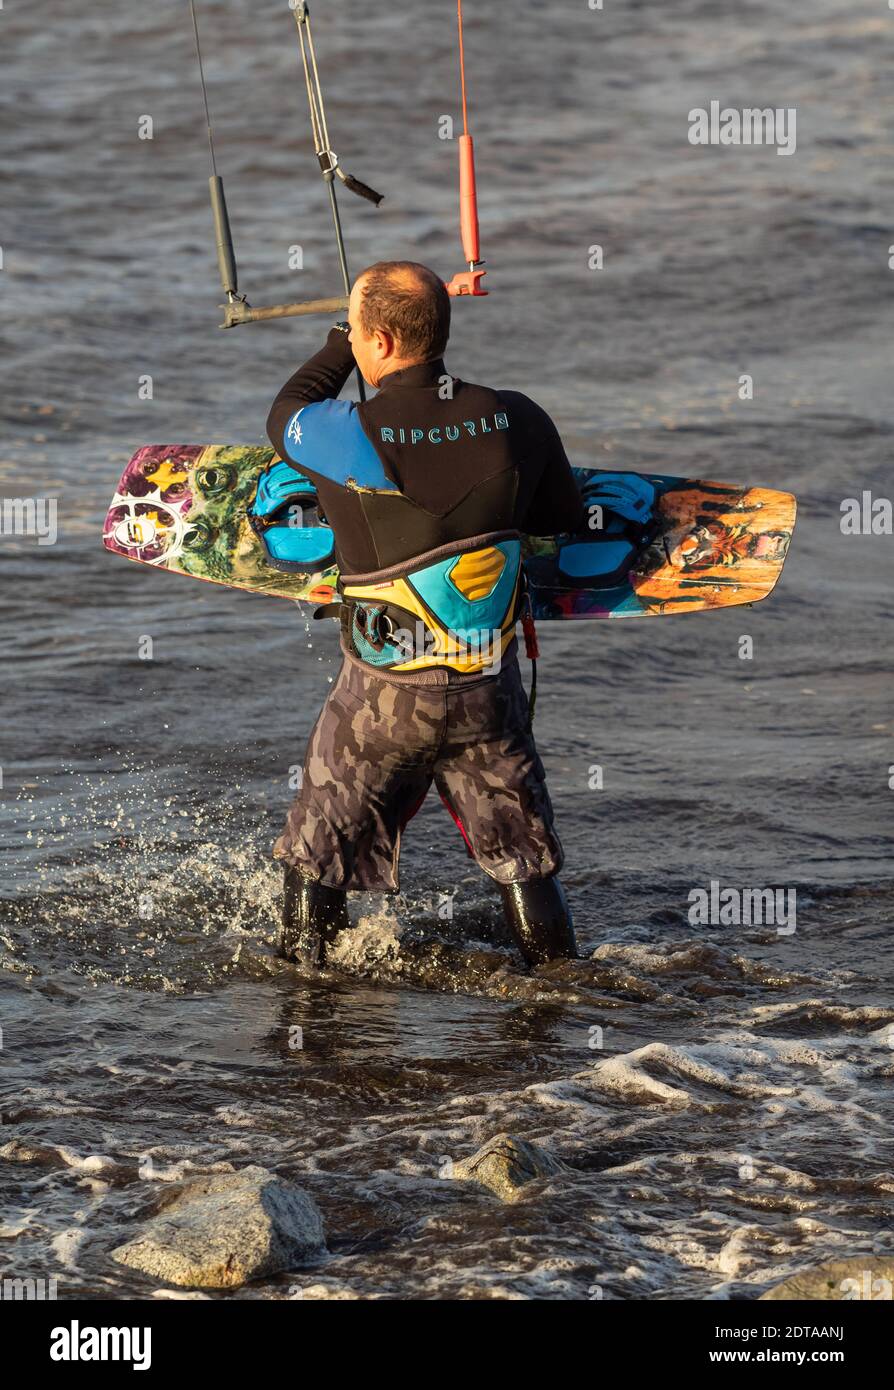 Kitesurfer, der am Strand ins Wasser kommt. White Rock, British Columbia, Kanada. Oktober 13,2020. Selektiver Fokus, Sportfoto, vertikal. Stockfoto